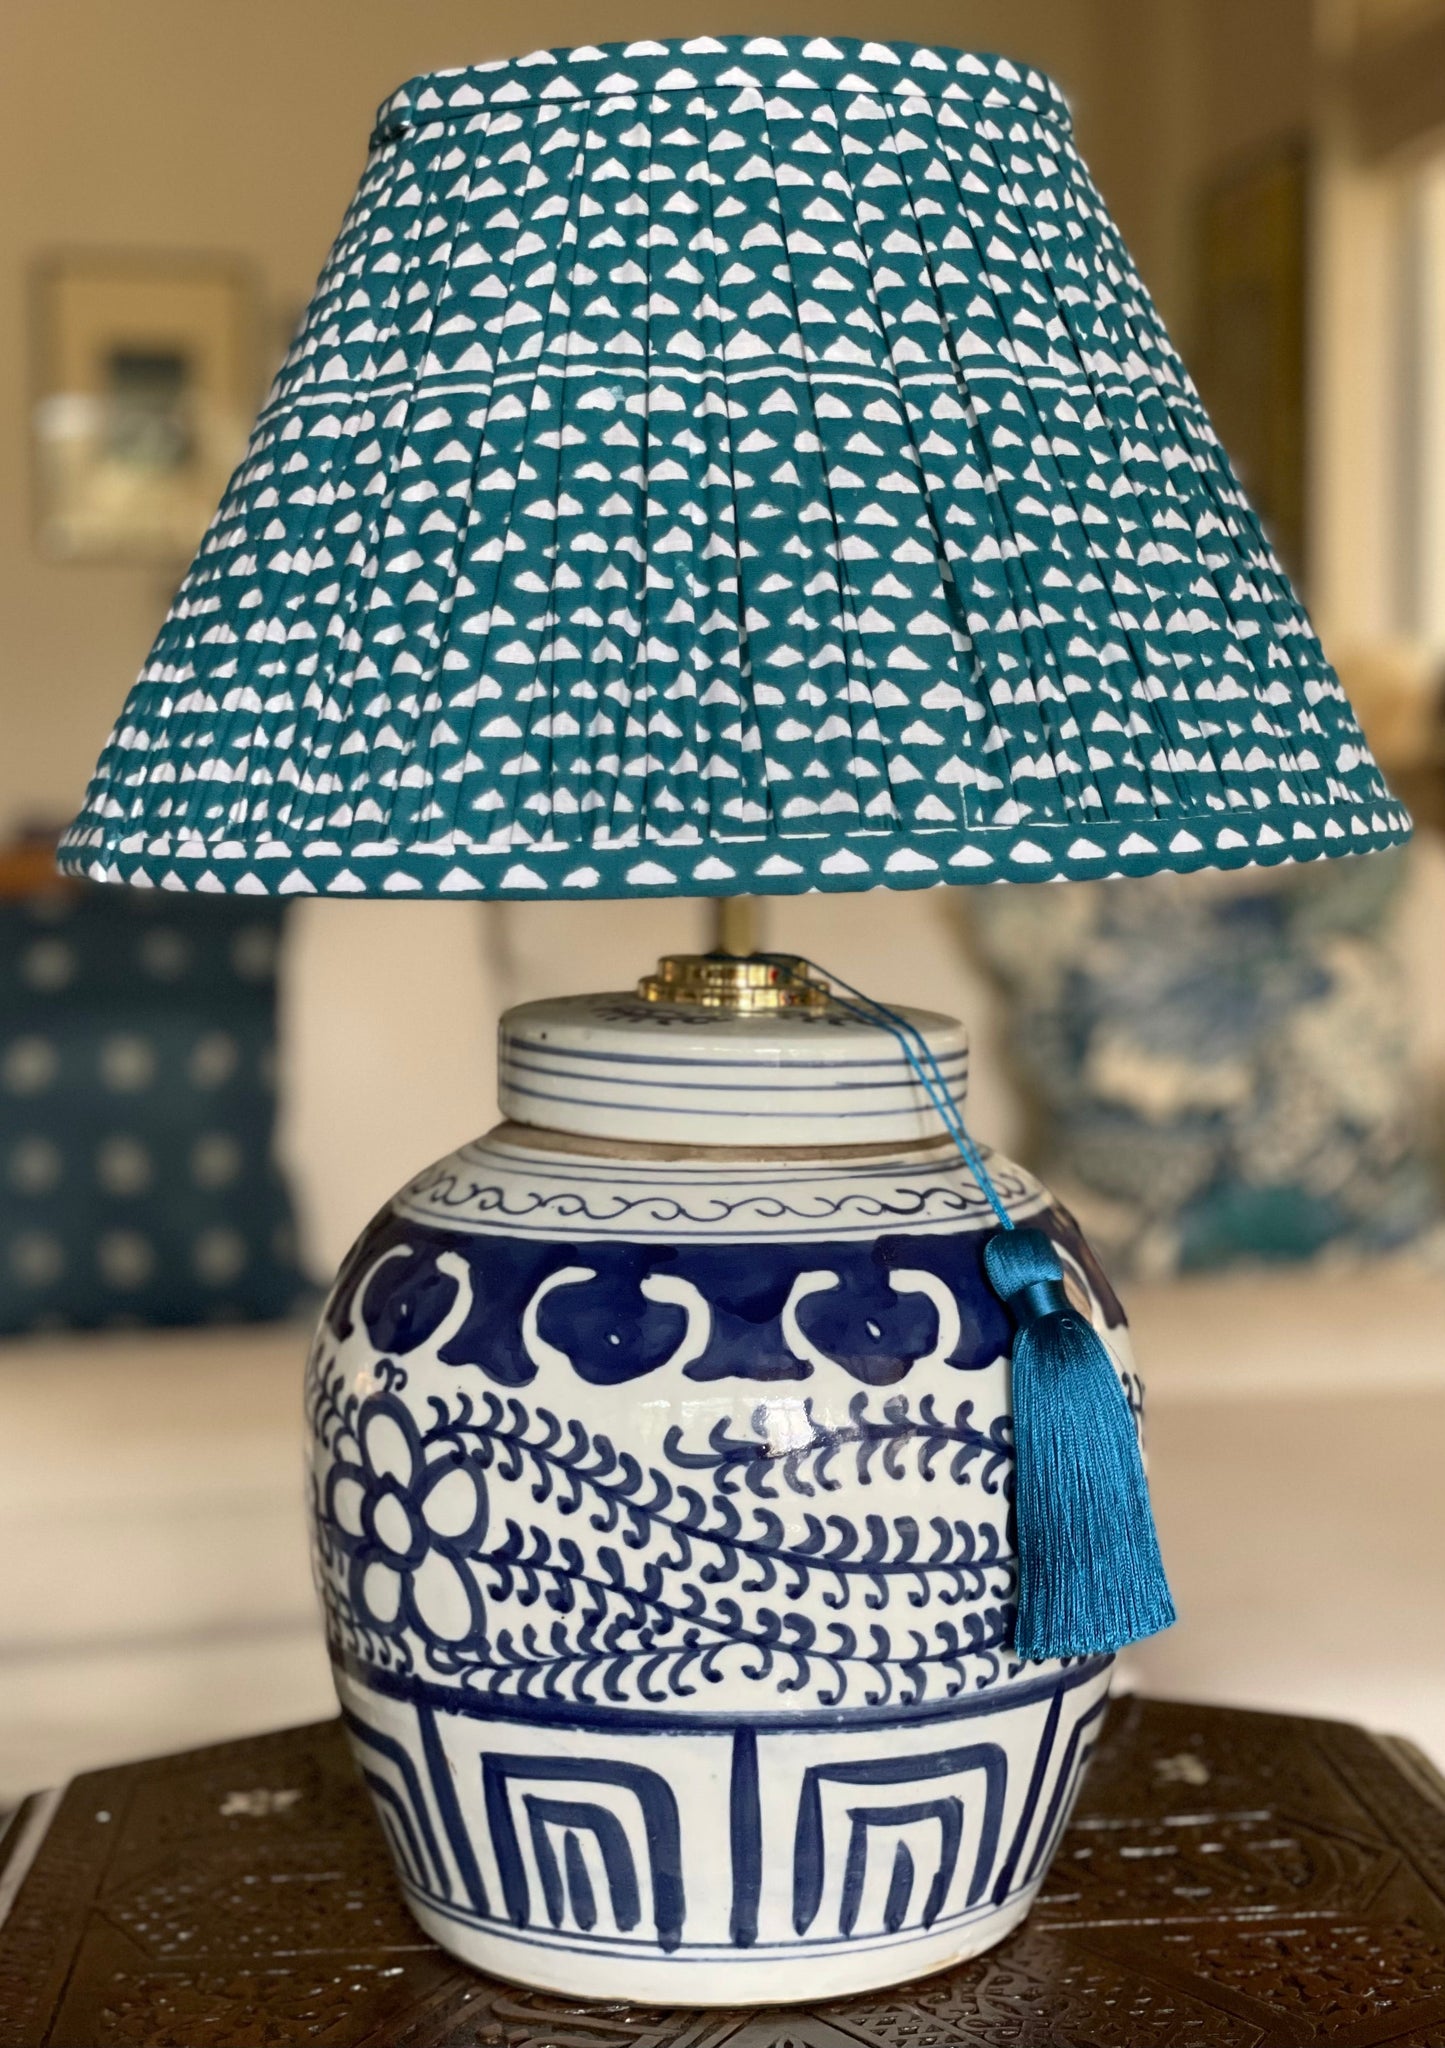 Azure Block-Print Cotton Gathered Lamp Shade with Ruyi Lamp